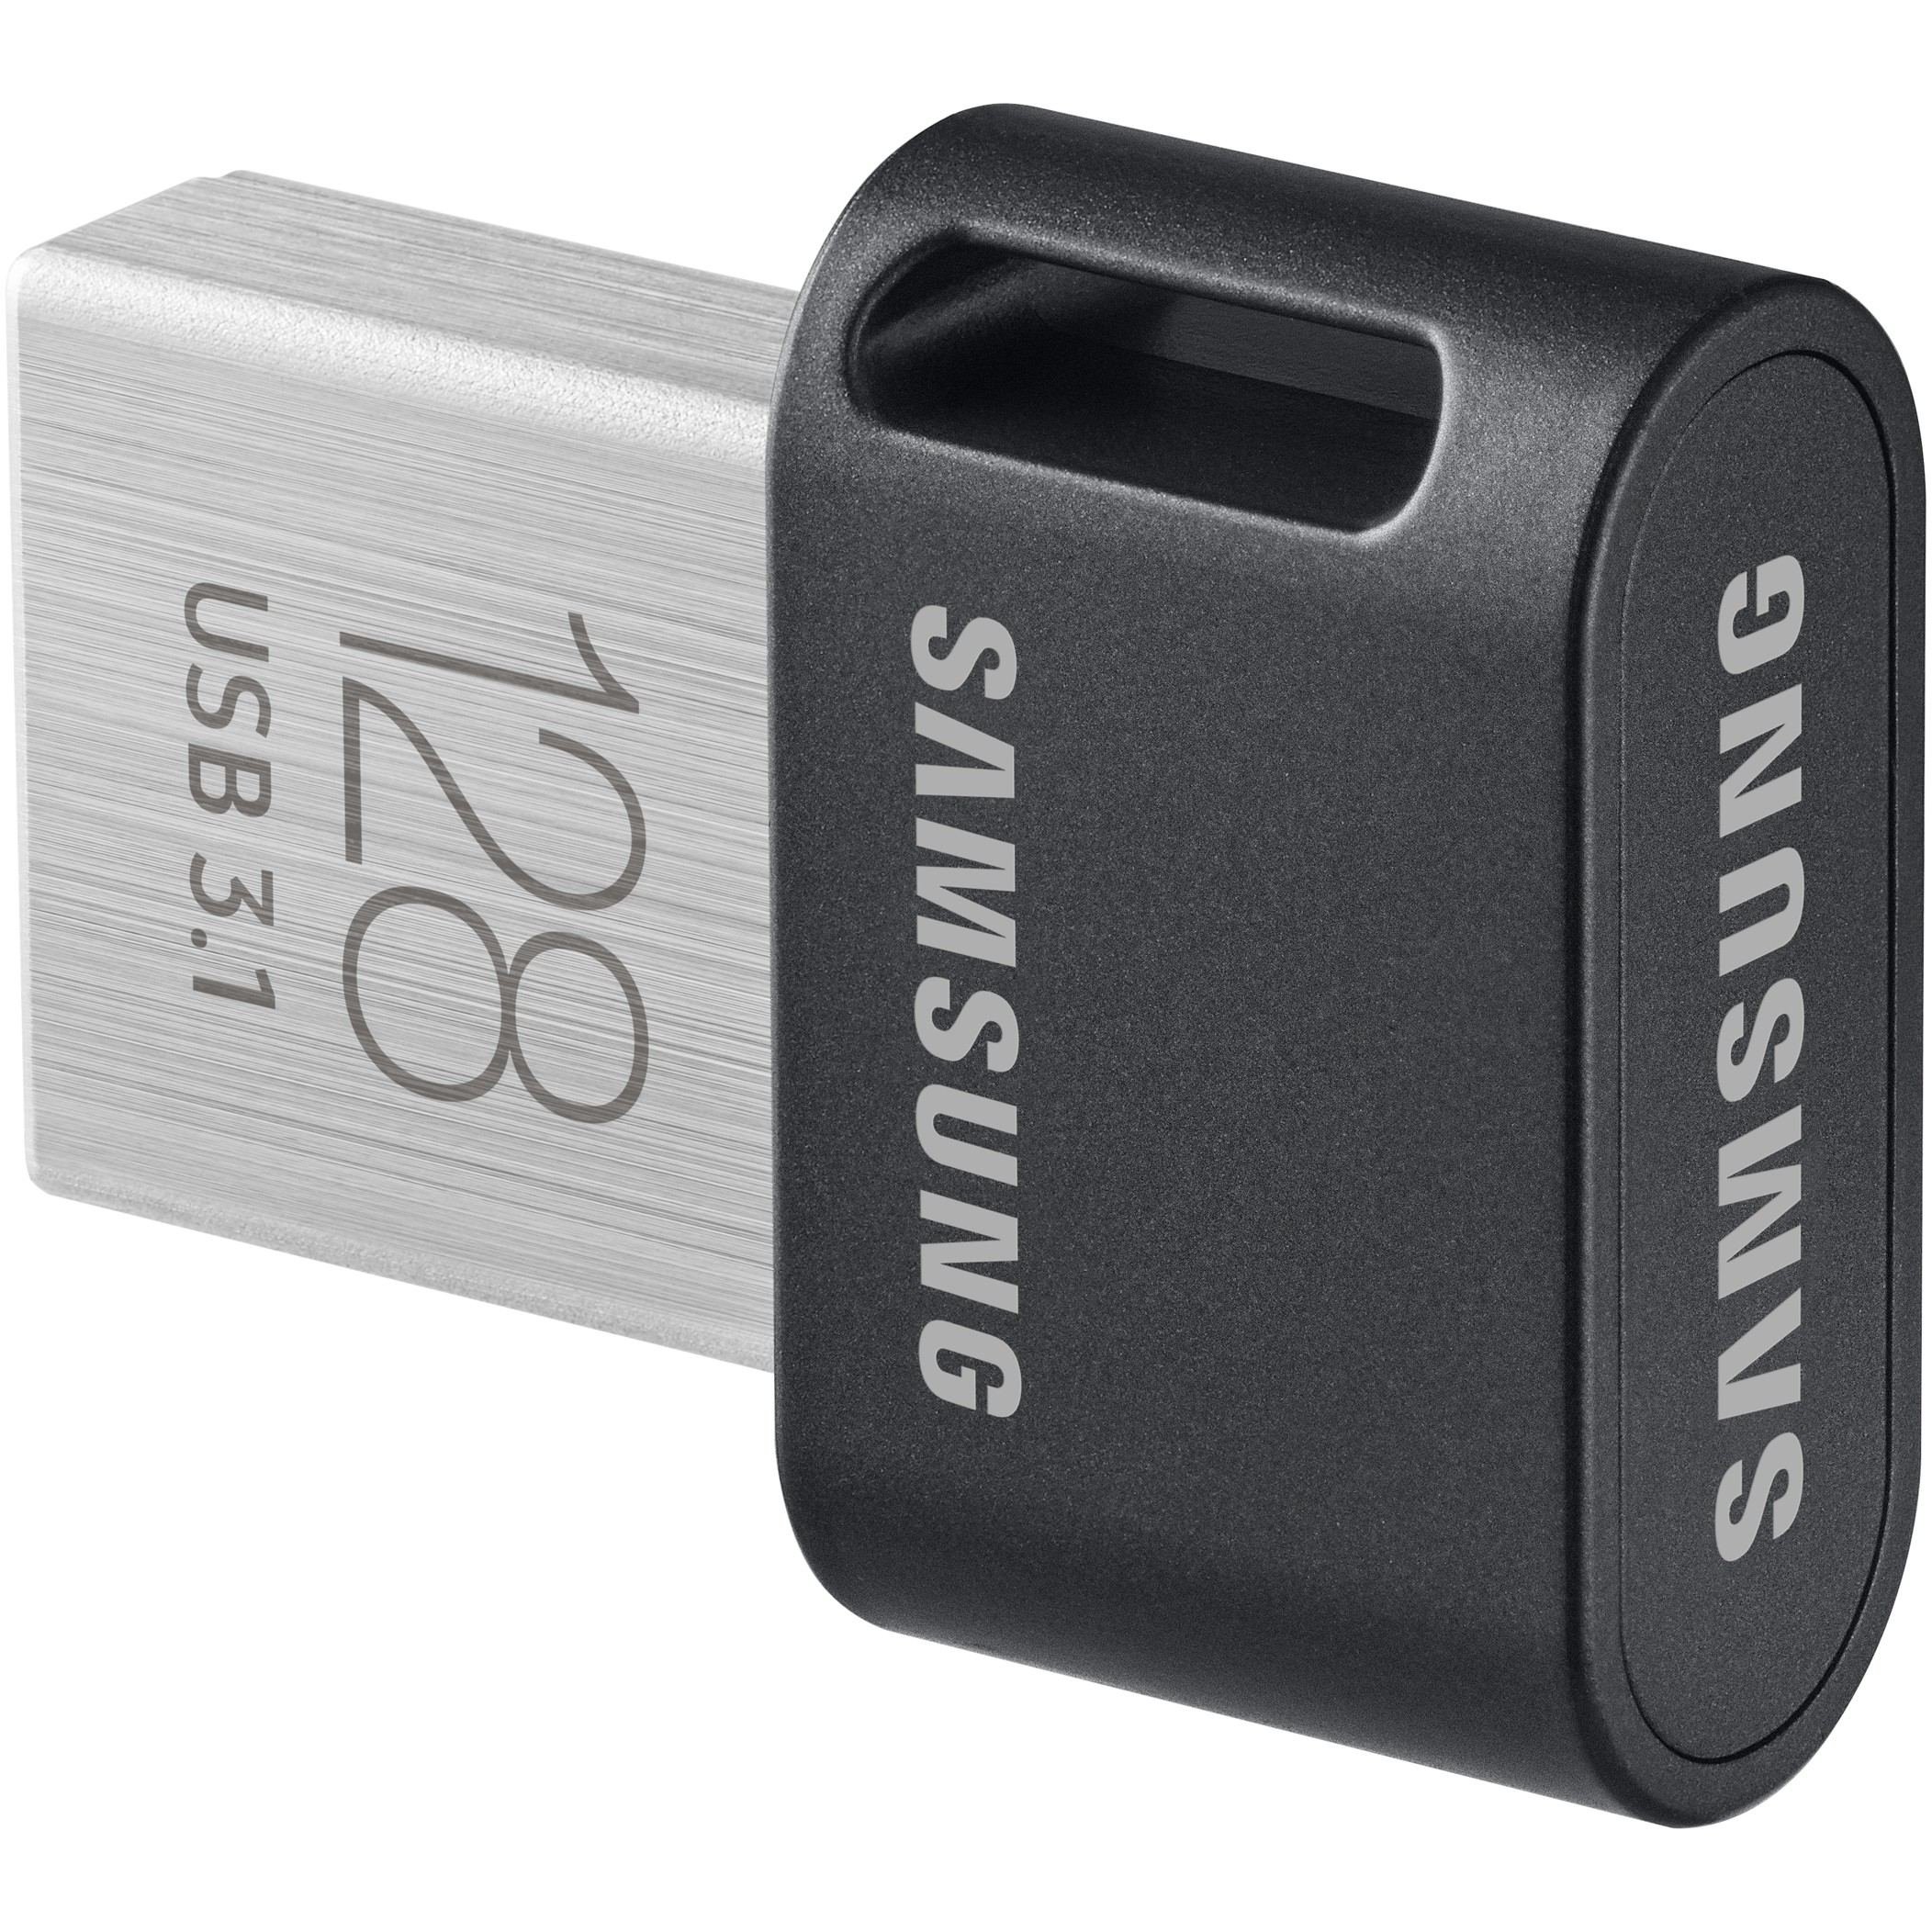 SAMSUNG MUF-128AB/APC, USB-Stick, Samsung MUF-128AB USB  (BILD3)